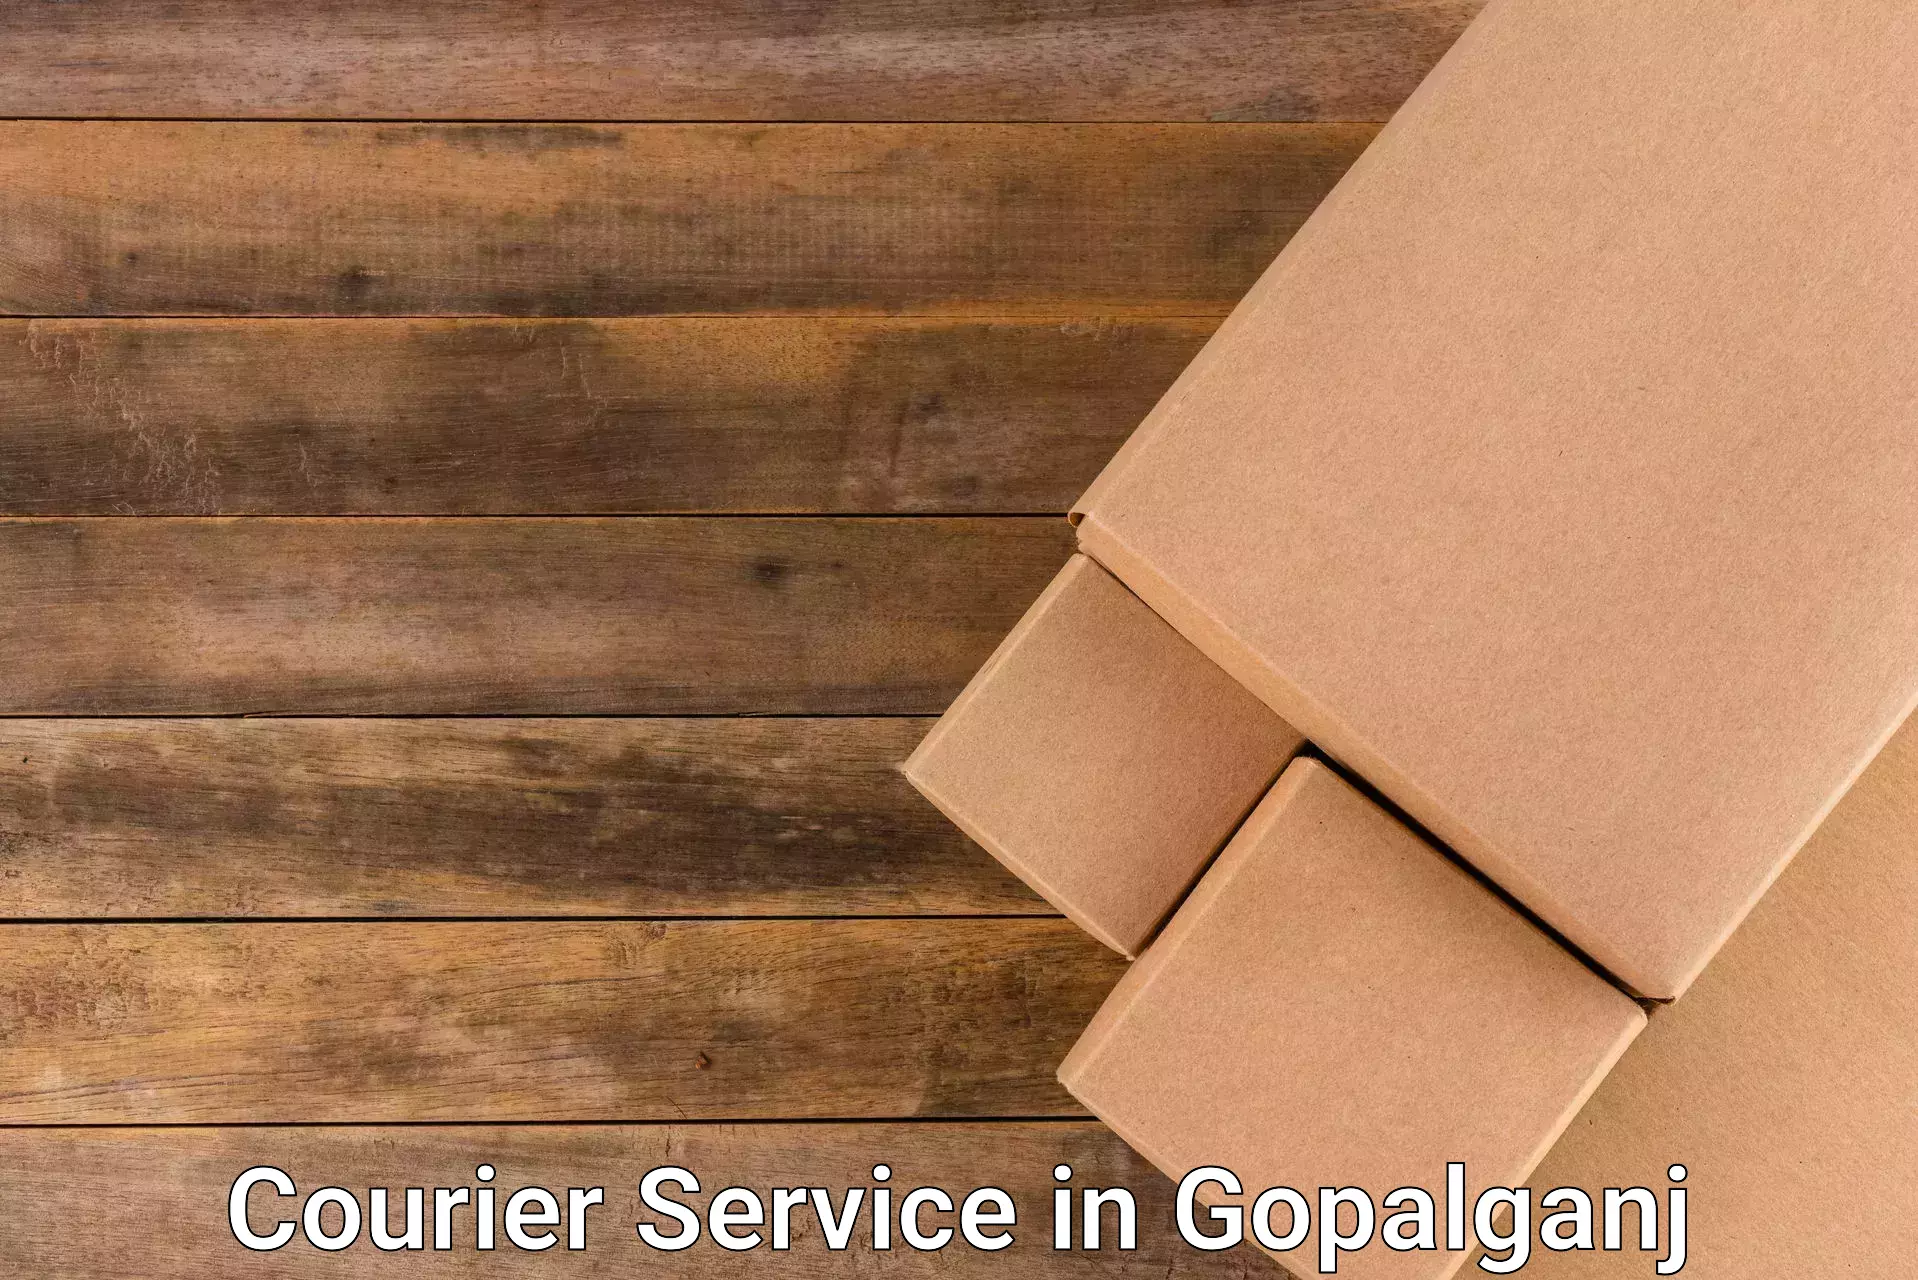 24-hour delivery options in Gopalganj